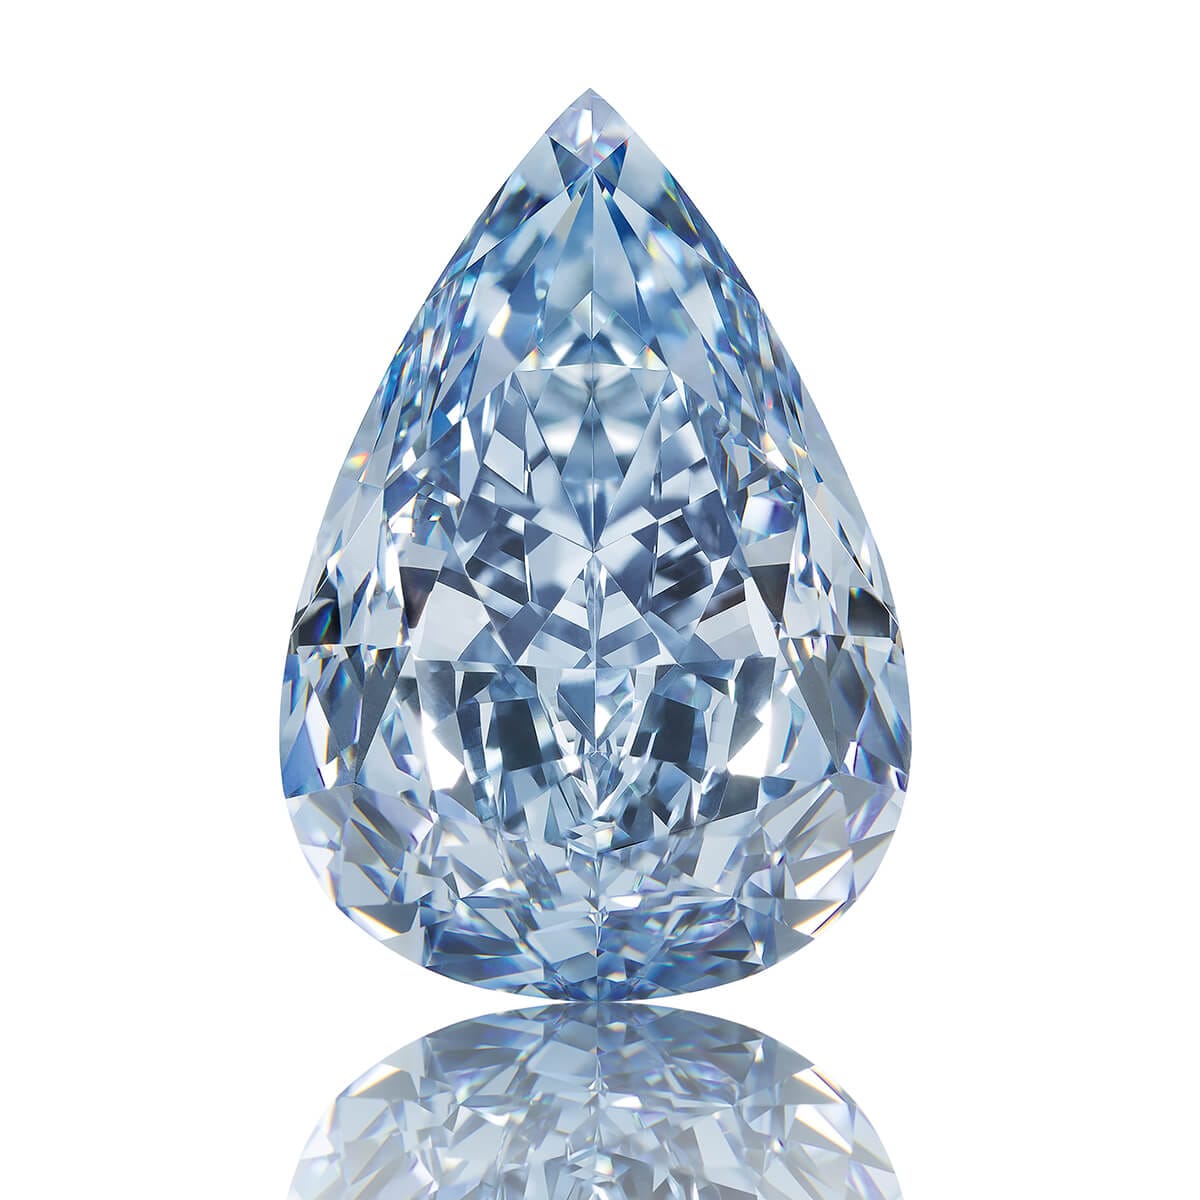 Image of the loose pear-shaped Winston Blue fancy vivid blue diamond